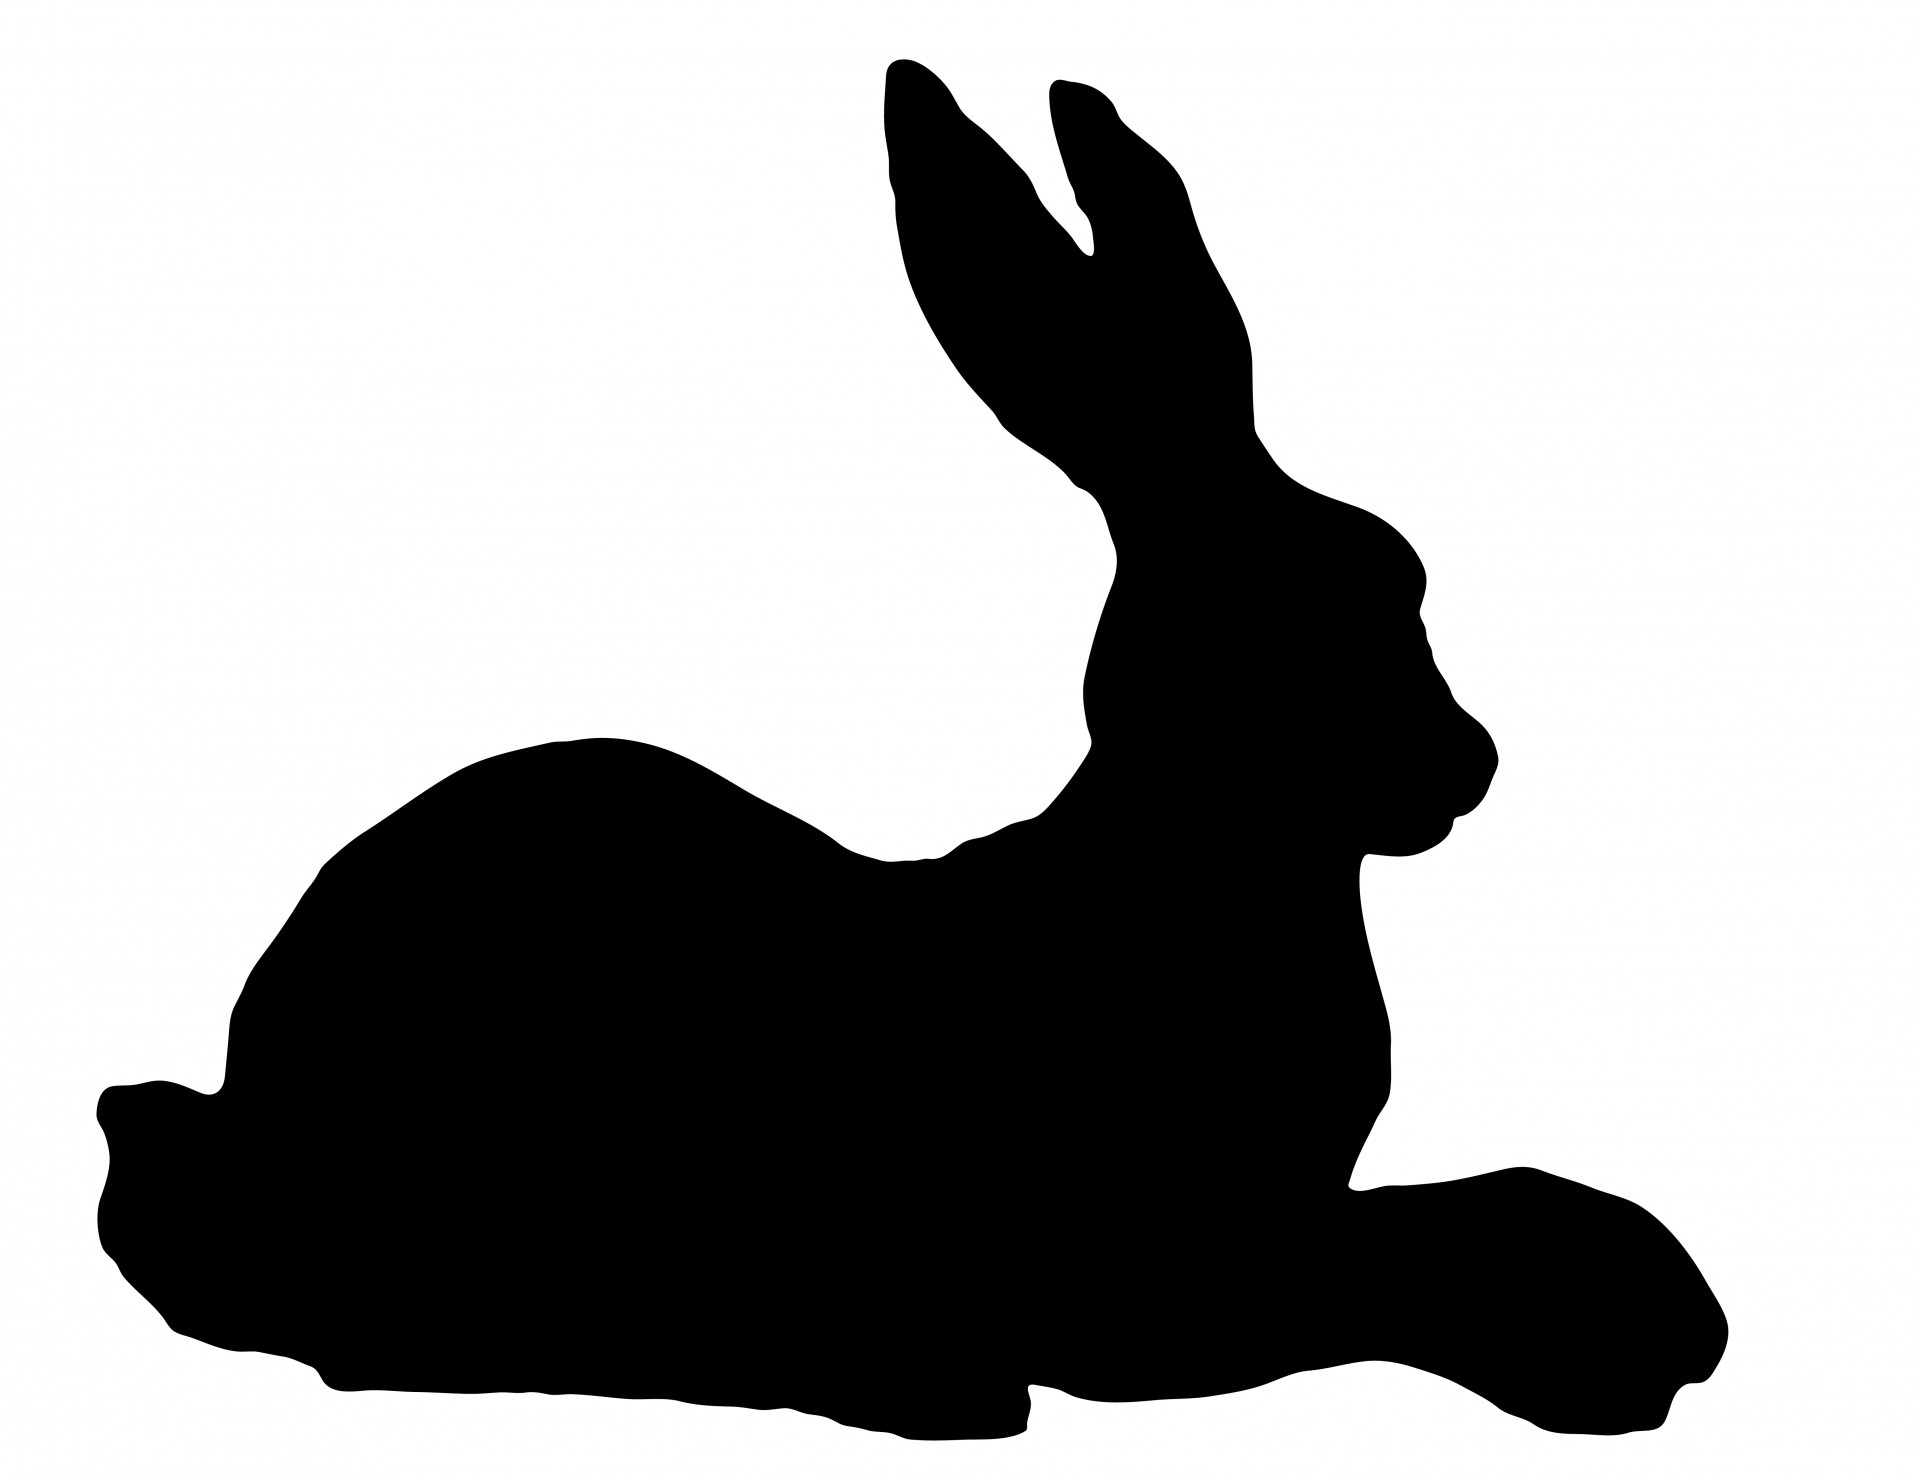 Rabbit silhouette clipart free stock photo public domain pictures